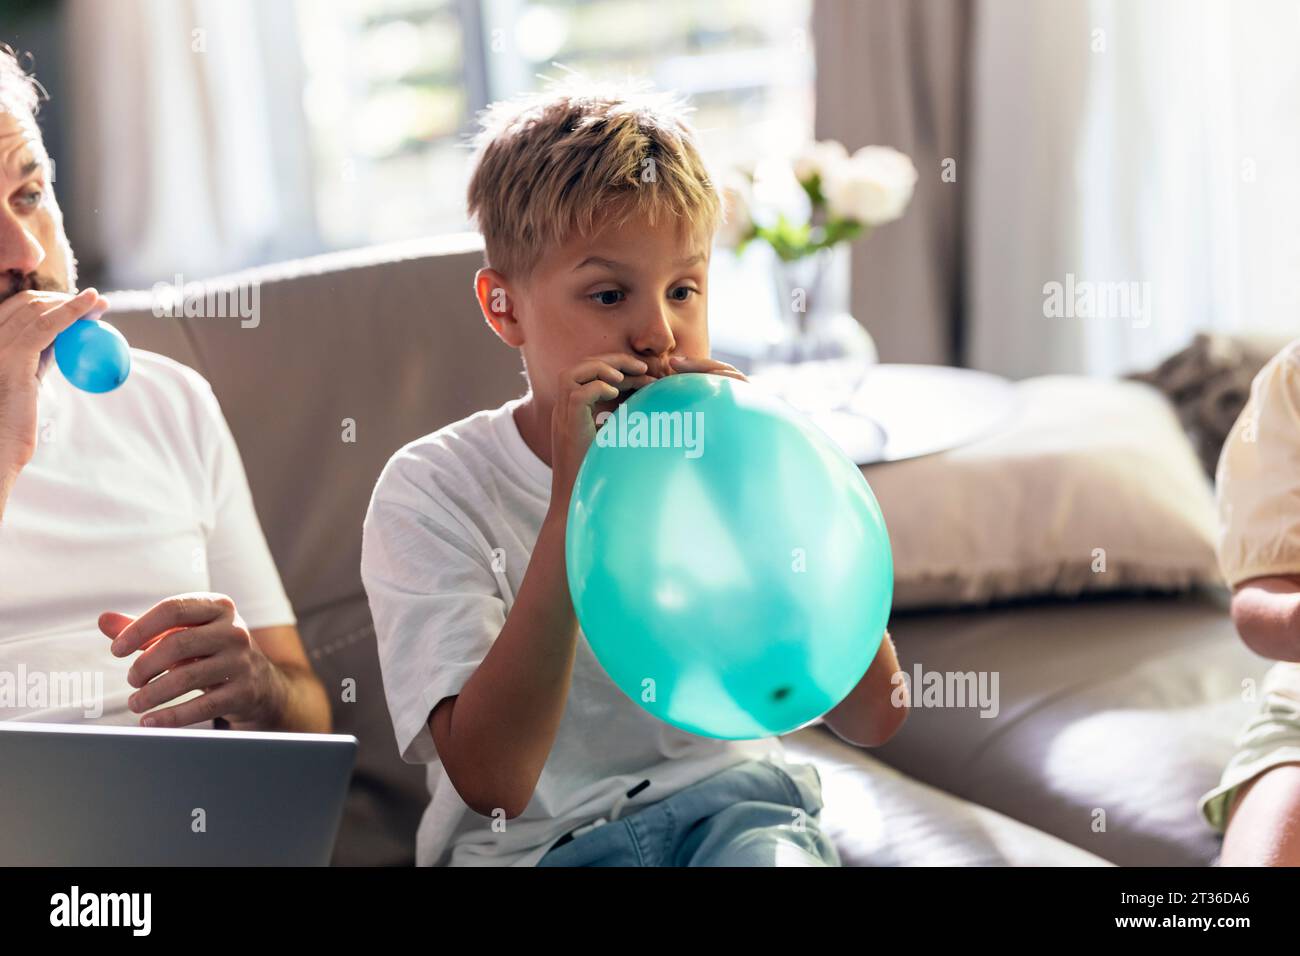 Balloon Fun – joyful parenting